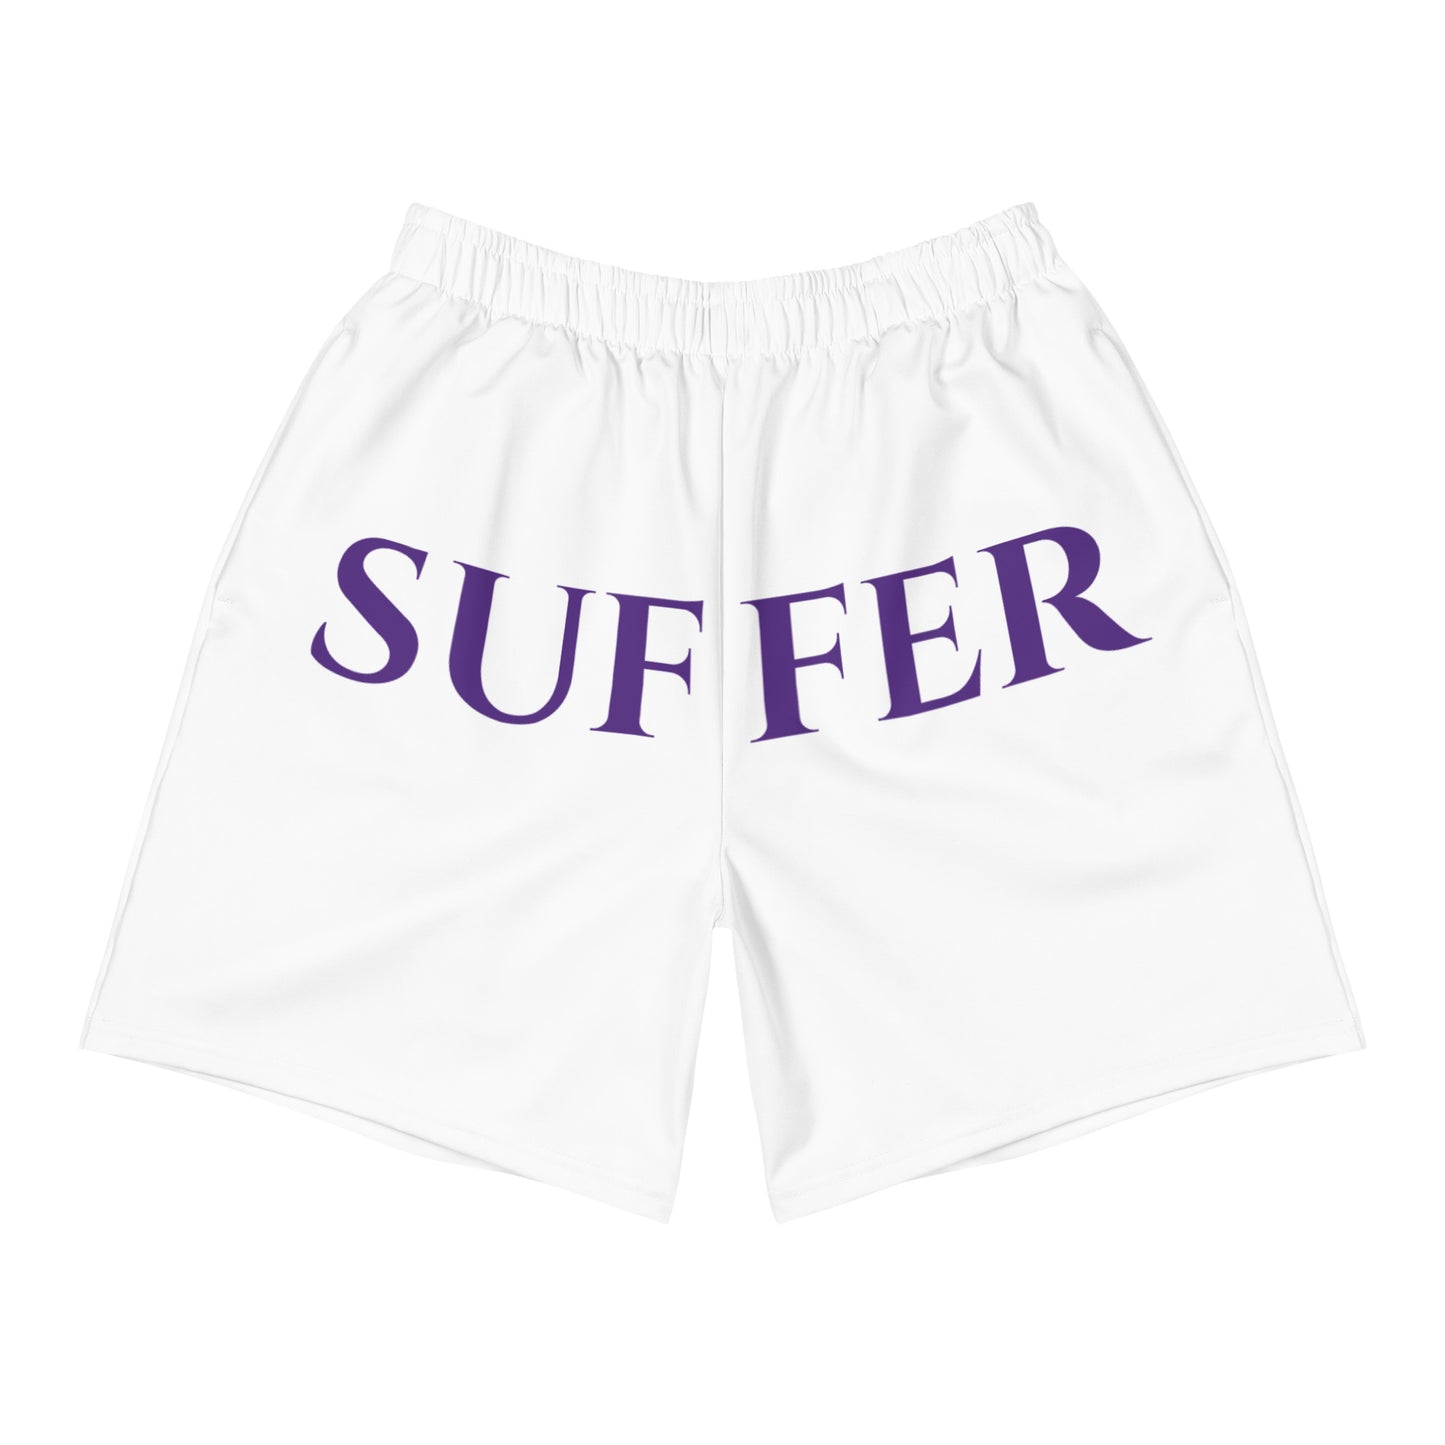 WhT/Purple Hip Suffer Athletic Shorts